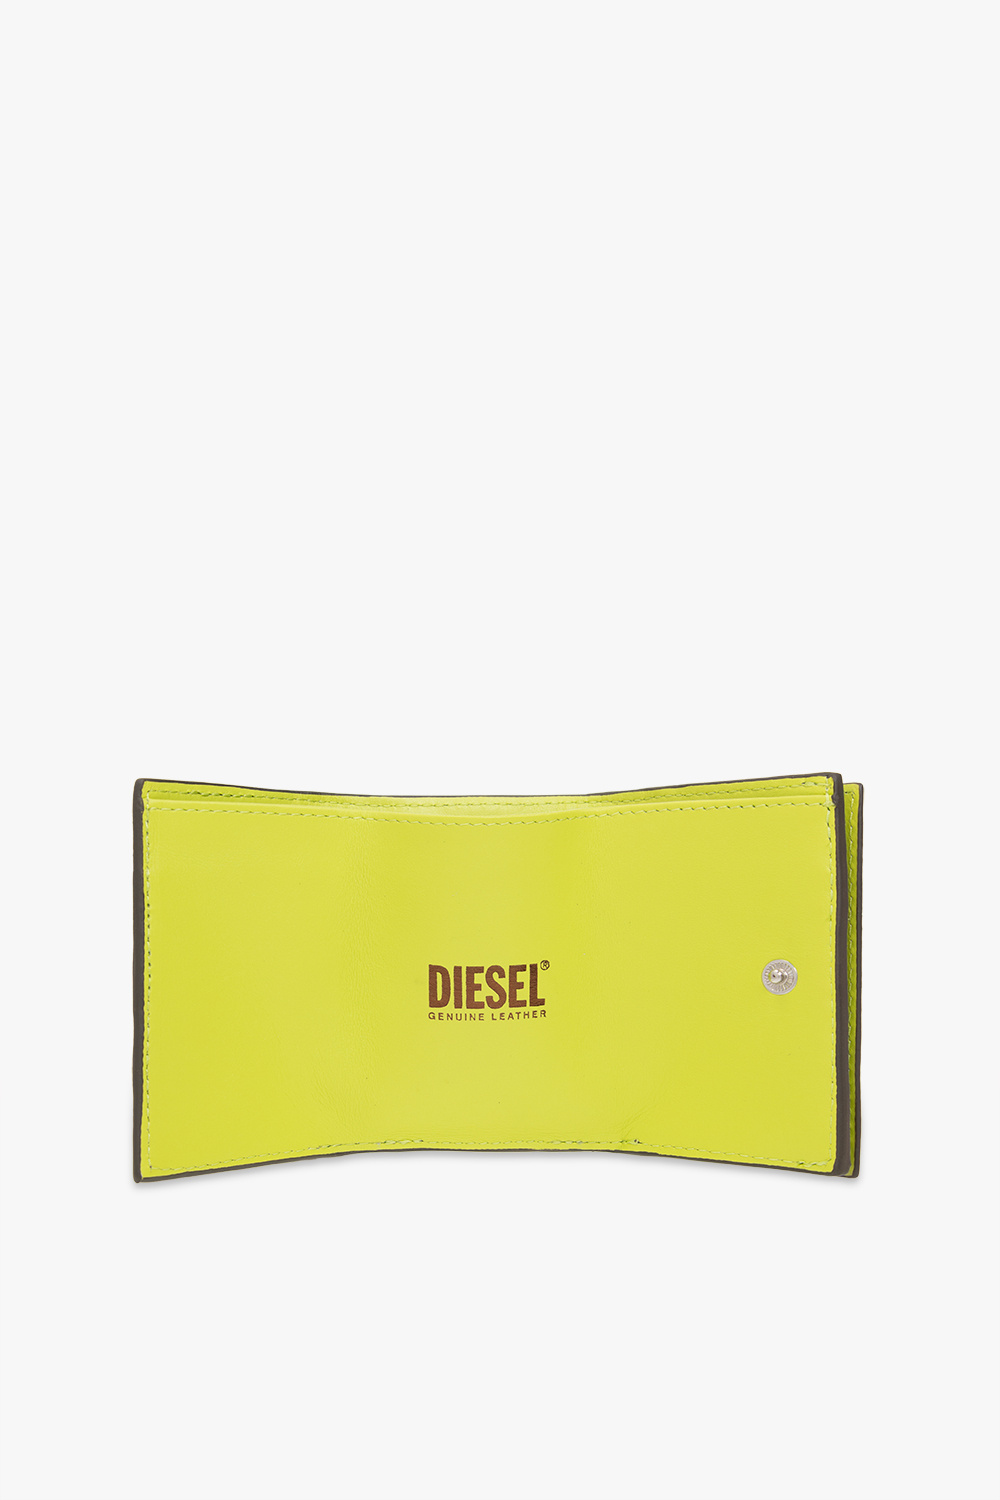 Diesel ‘1DR TRI-FOLD’ wallet